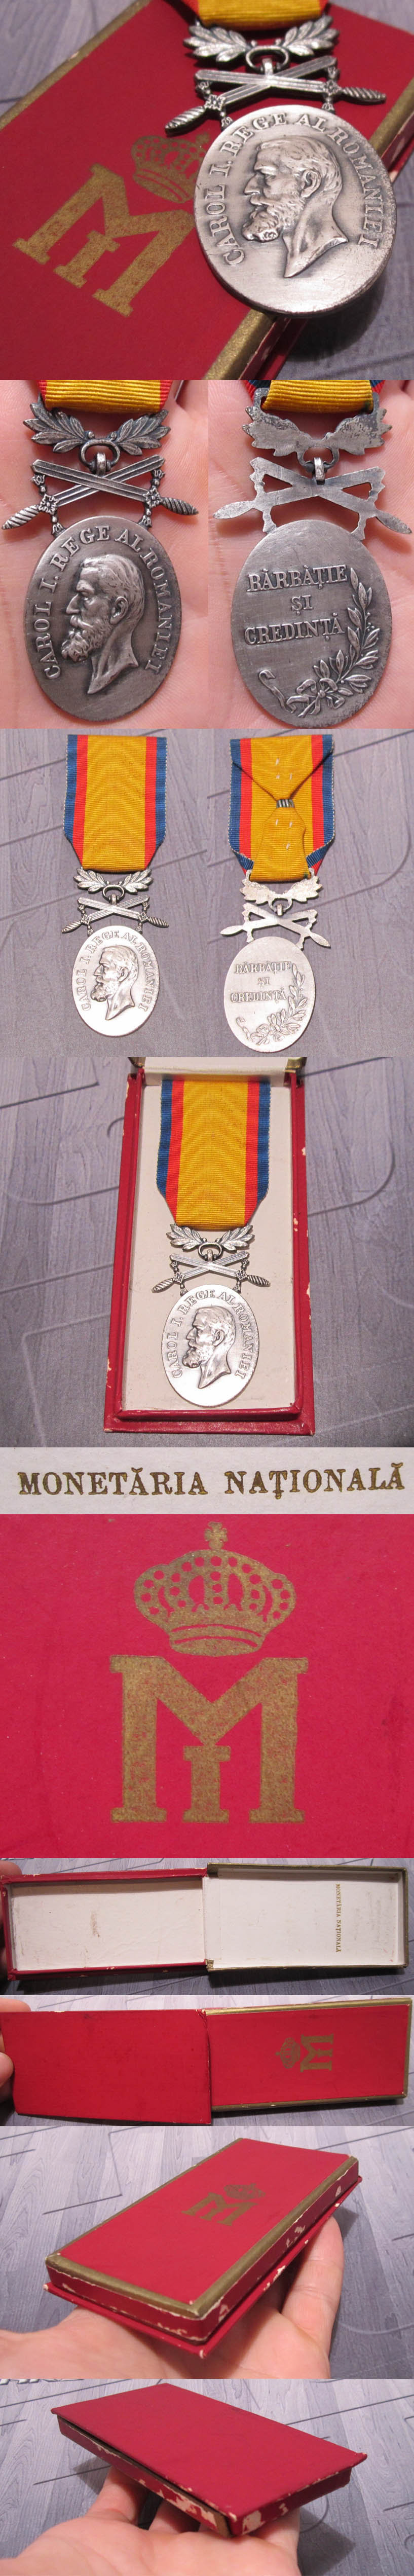 Romanian Manhood and Faithfulness Medal 